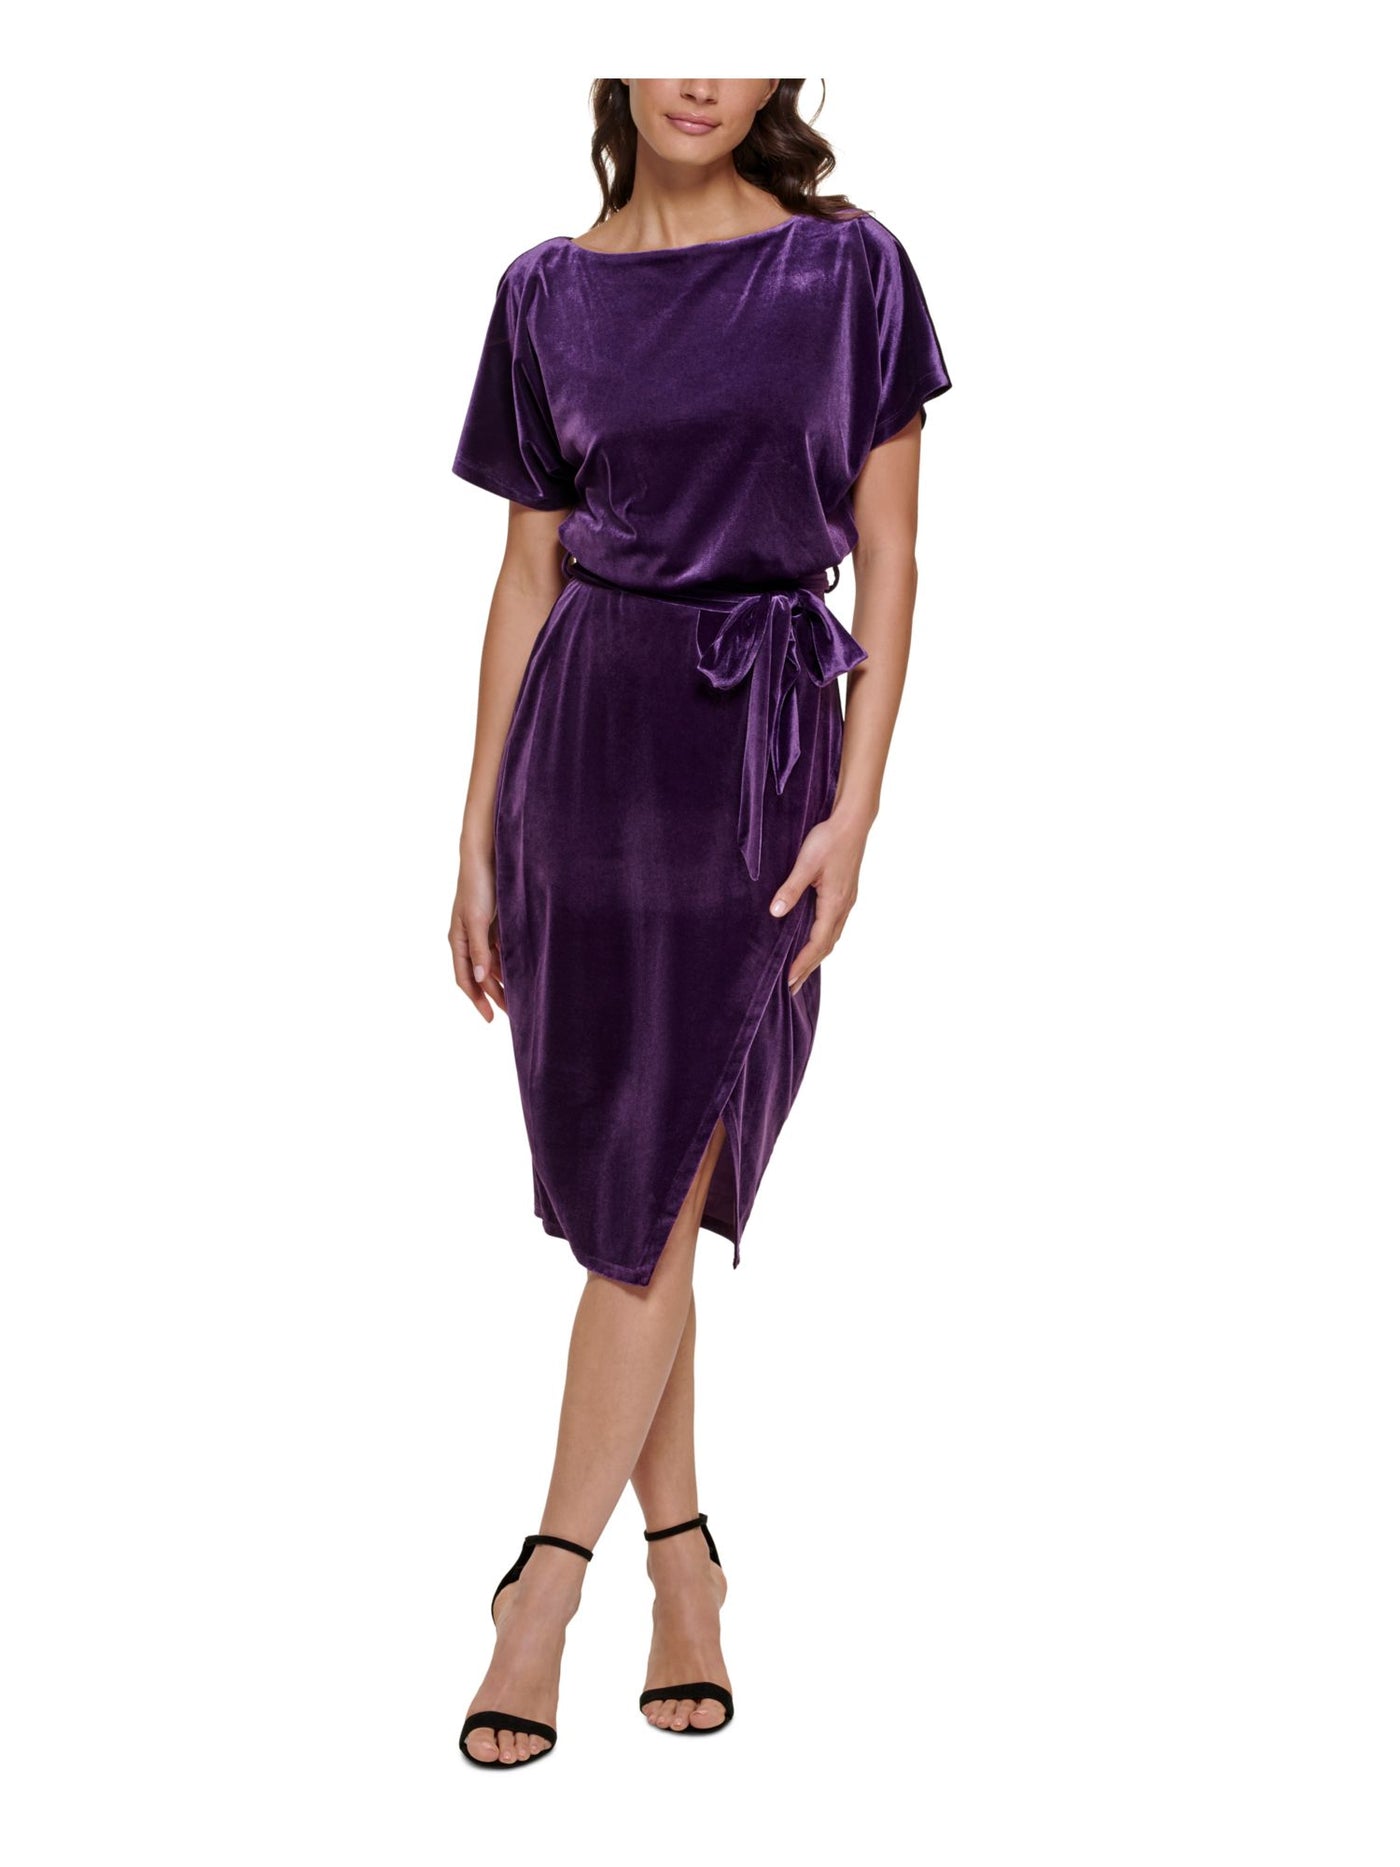 KENSIE DRESSES Womens Purple Belted Wrap-front Skirt Short Sleeve Boat Neck Knee Length Party Sheath Dress S